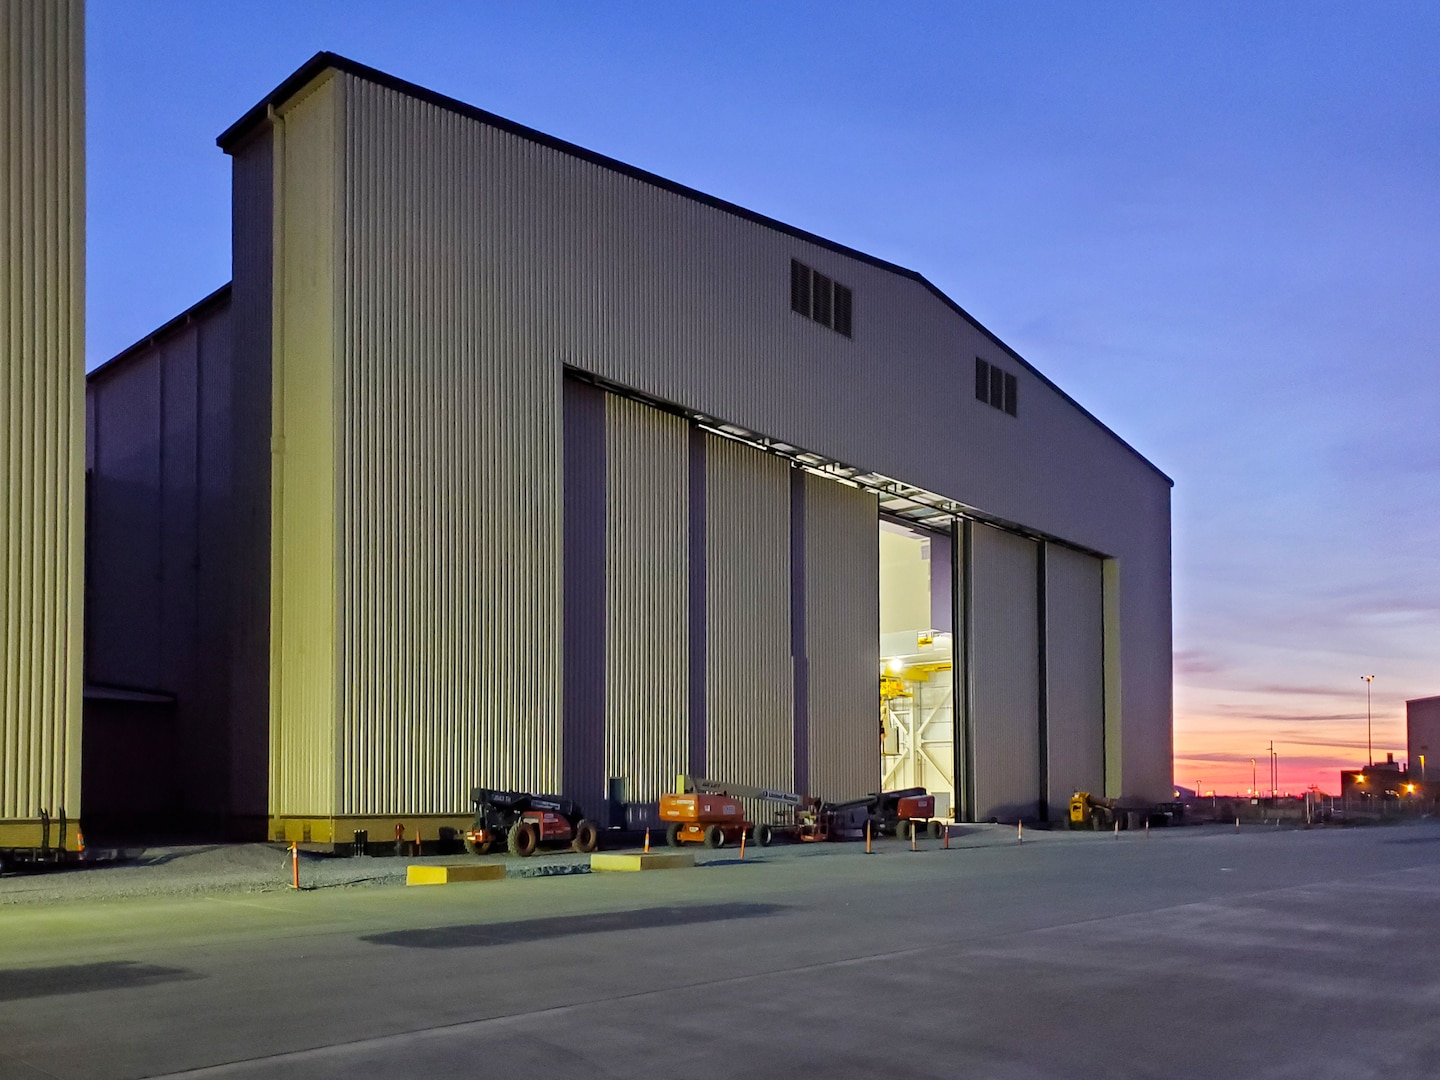 KC-46 depot maintenance hangar exterior at Tinker Air Force Base, Oklahoma. (U.S. Air Force photo)